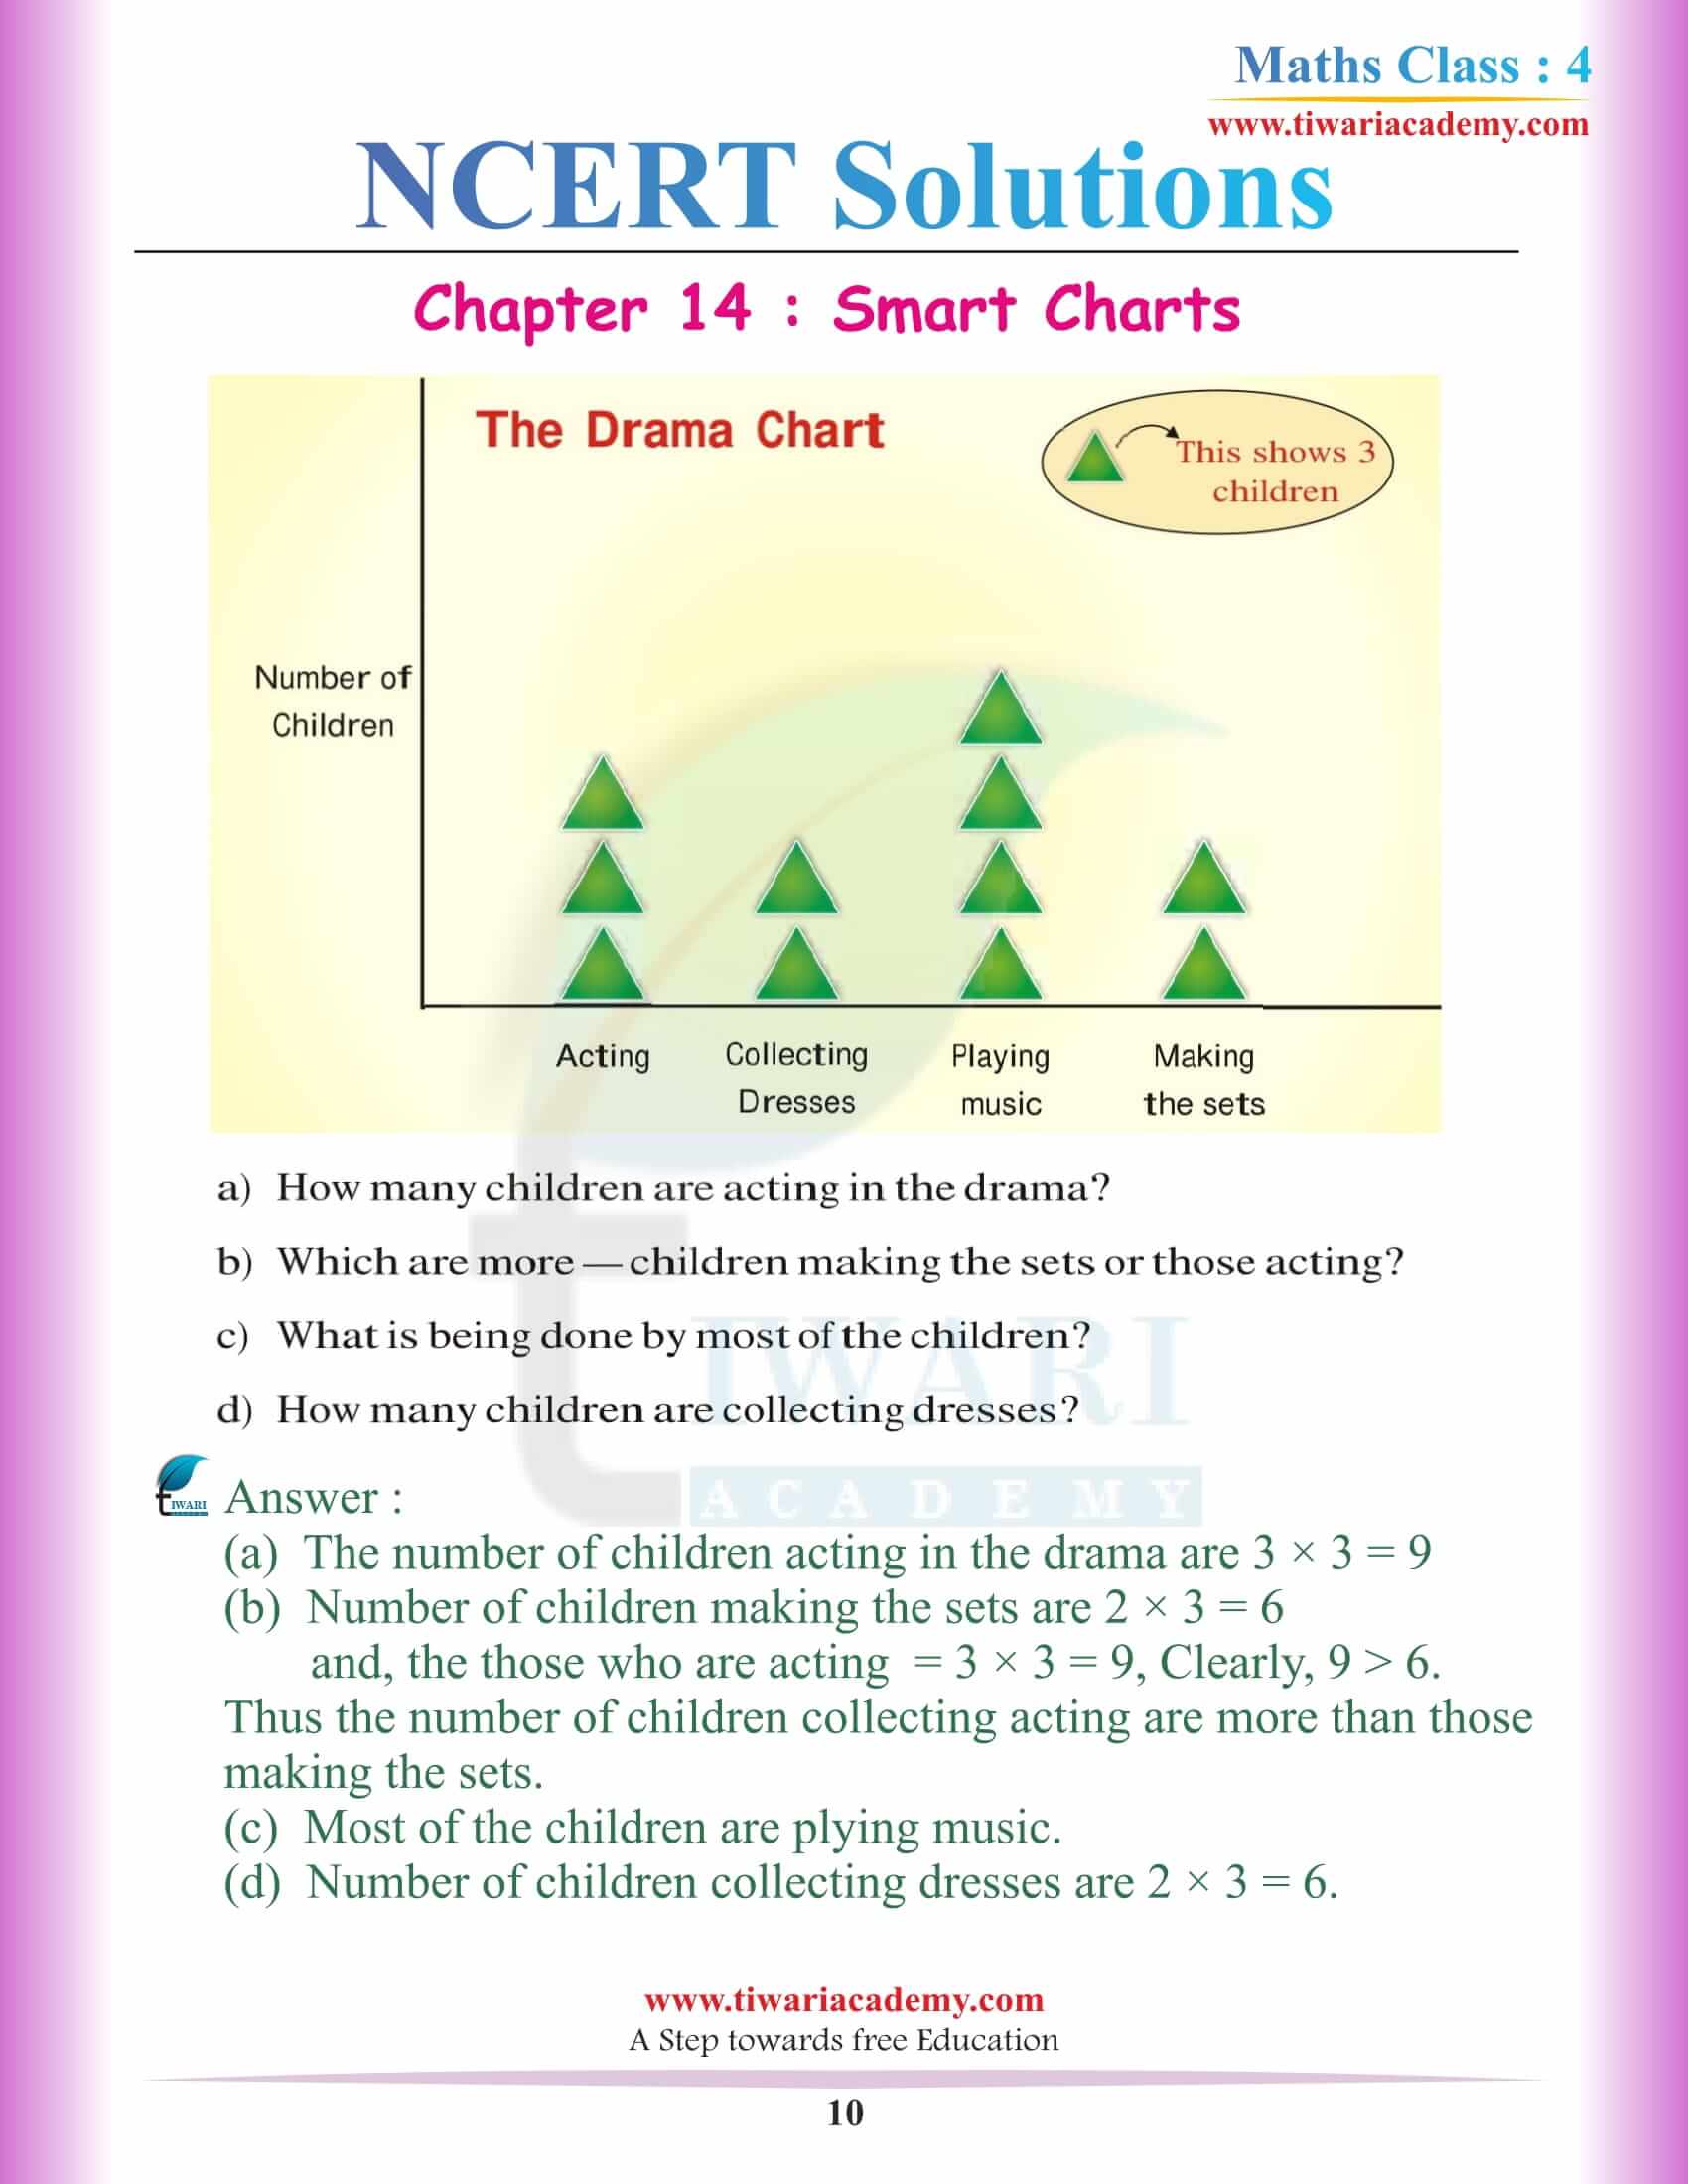 Class 4 Maths NCERT Chapter 14 Solutions free download